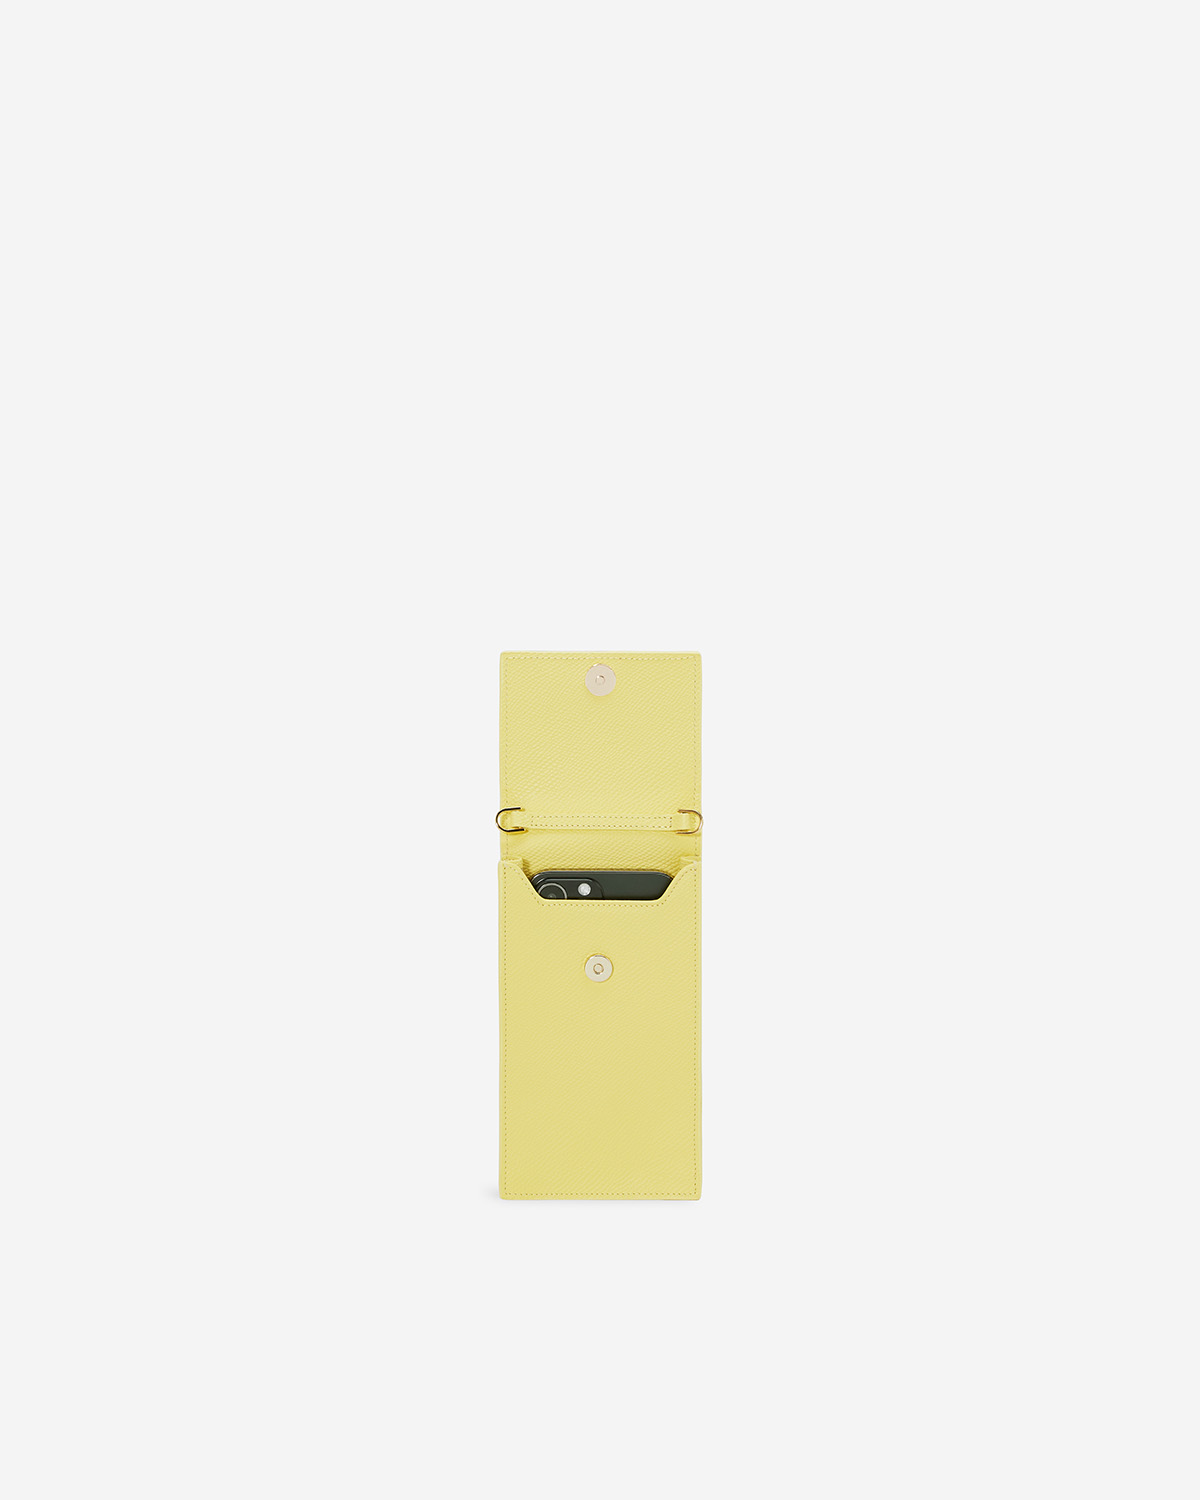 VERA Emily Phone Pouch with Leather Gold Chain in Happy Yellow กระเป๋าใส่โทรศัพท์หนังแท้ พร้อมฟังก์ชั่นกระเป๋าสตางค์ มาพร้อมสายสะพายโซ่หนังถอดได้ สีเหลือง